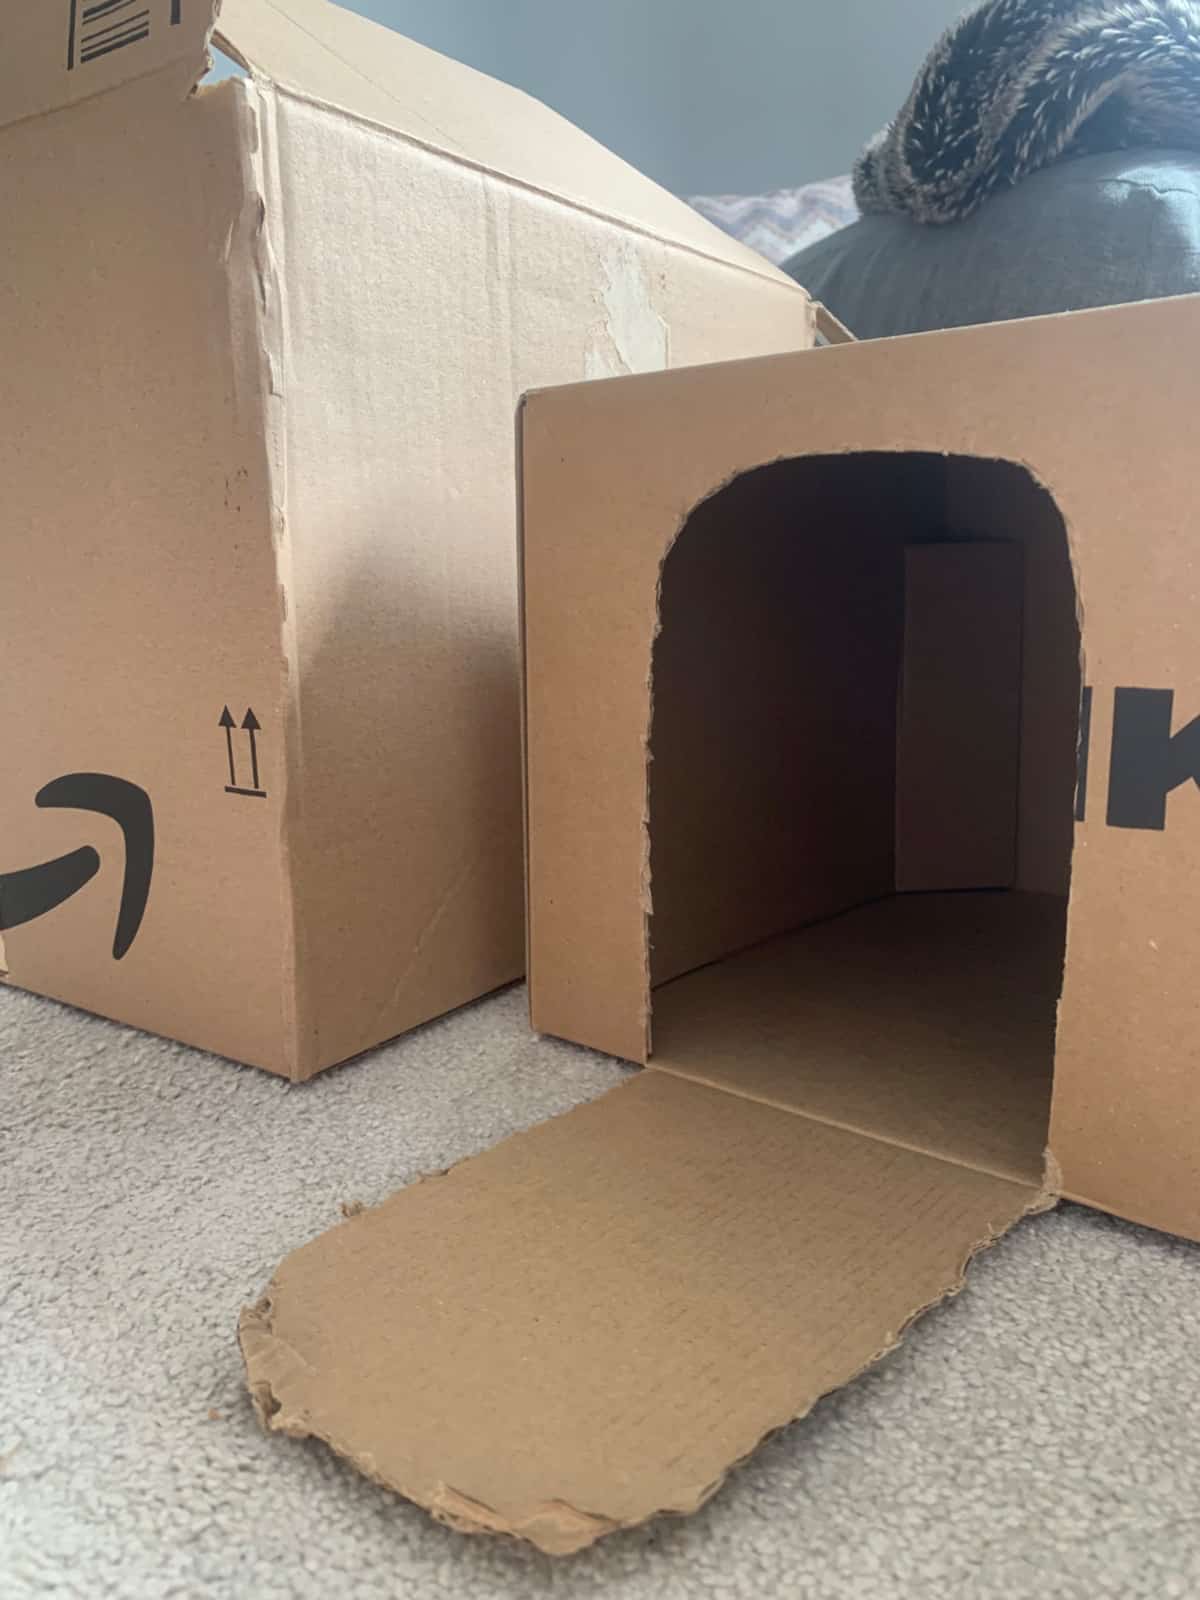 DIY Cardboard Cat House